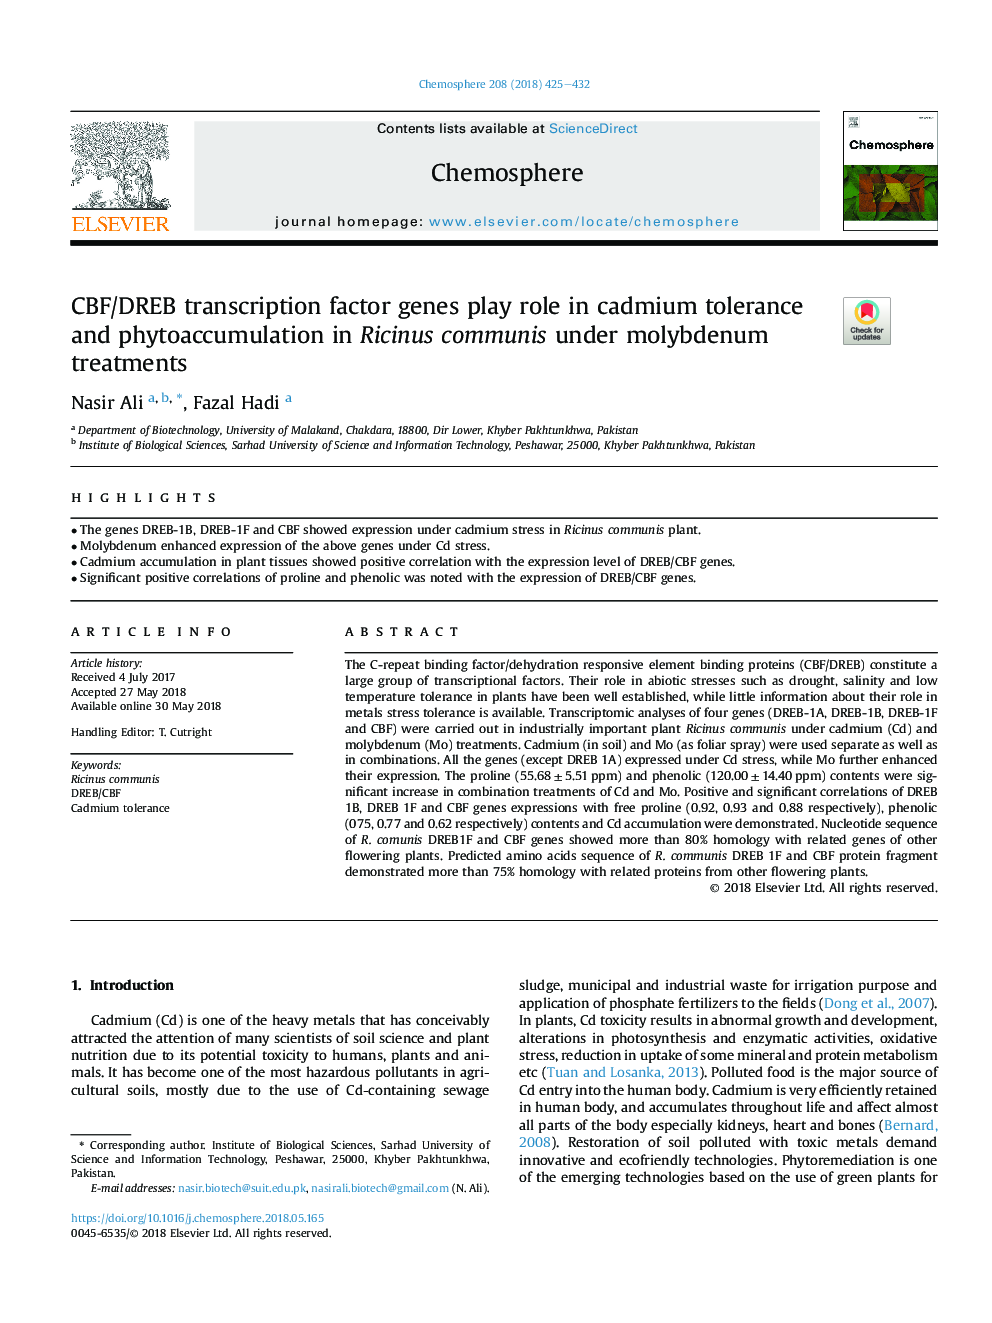 CBF/DREB transcription factor genes play role in cadmium tolerance and phytoaccumulation in Ricinus communis under molybdenum treatments